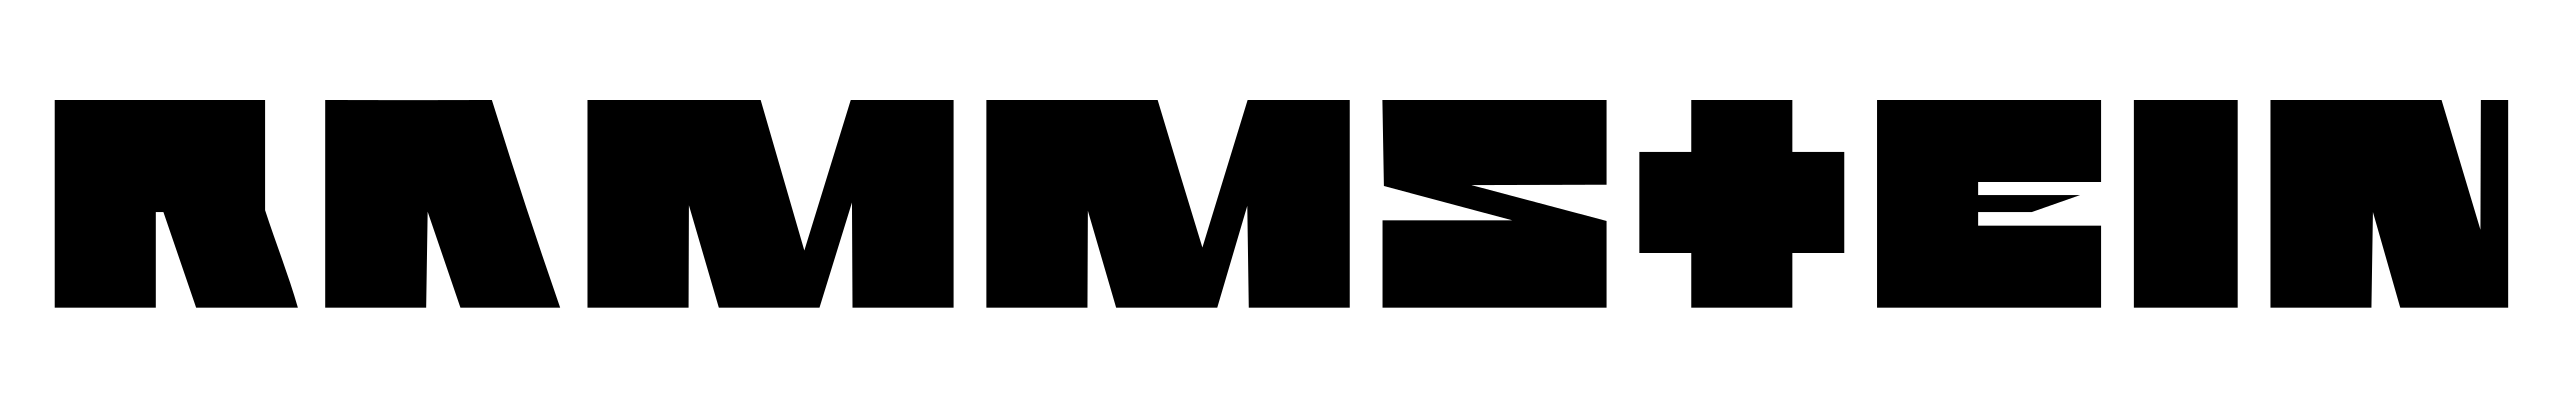 Archivo:Rammstein logo.svg - Wikipedia, la enciclopedia libre